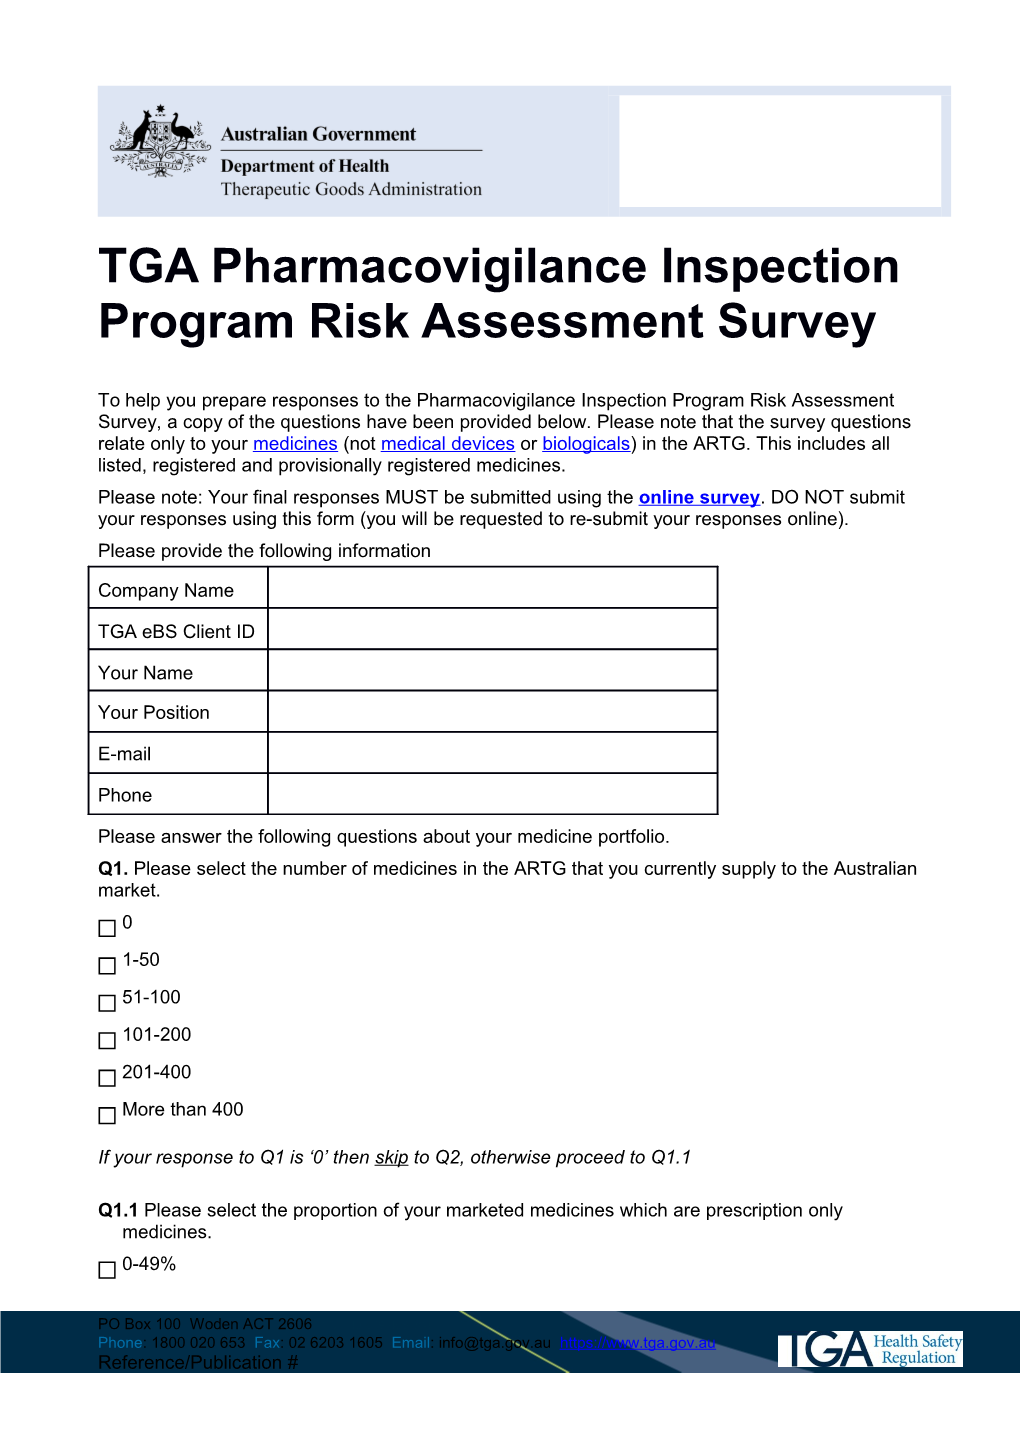 Pharmacovigilance Inspection Program Risk Assessment Survey